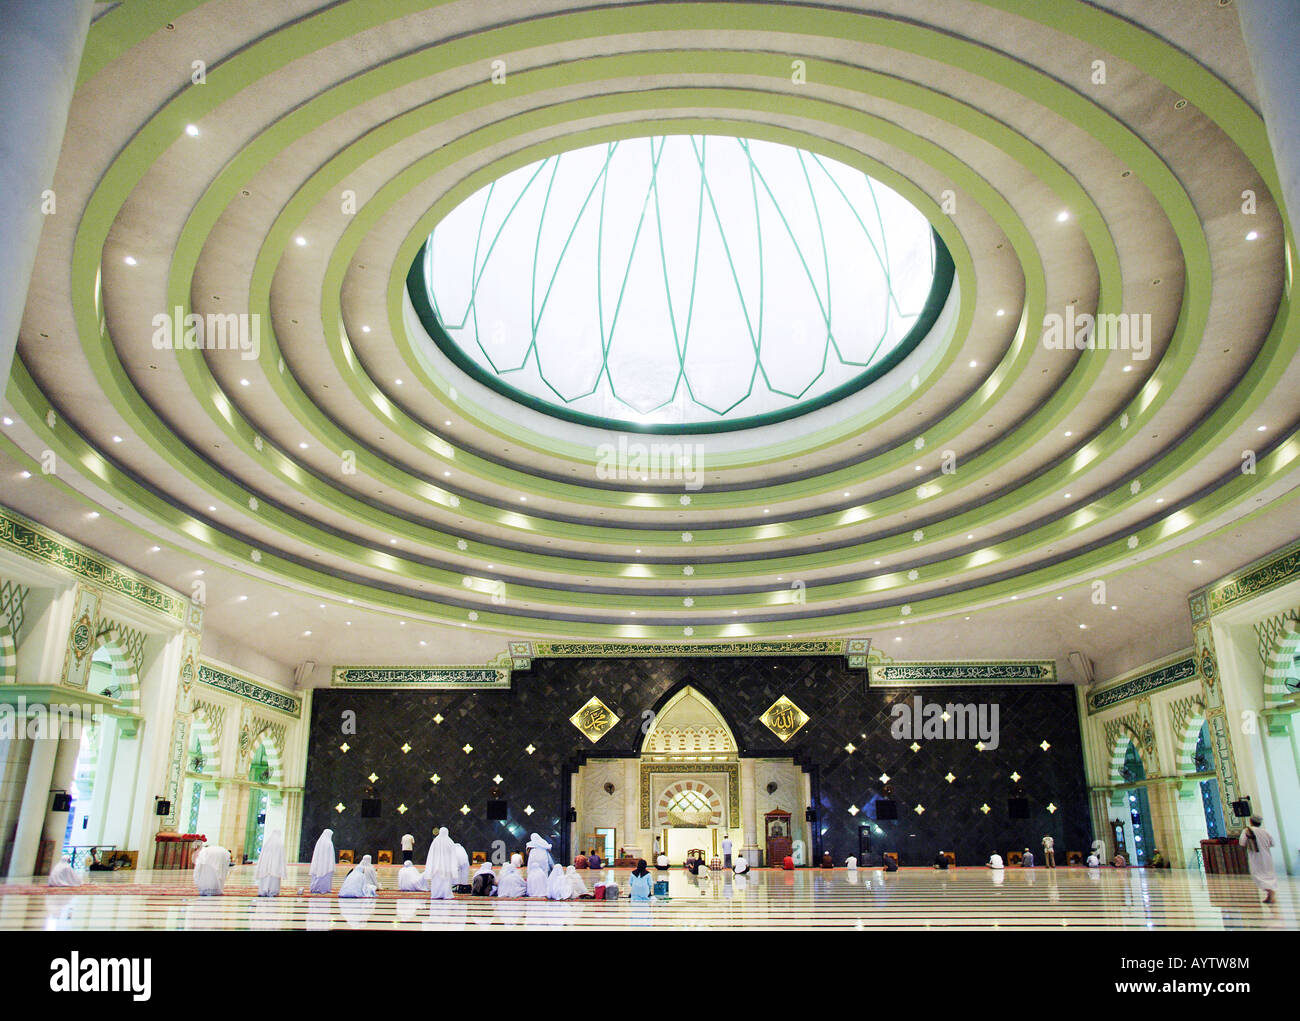 Indonesia: Masjid Raya Mosque in Makassar, Sulawesi Island Stock Photo